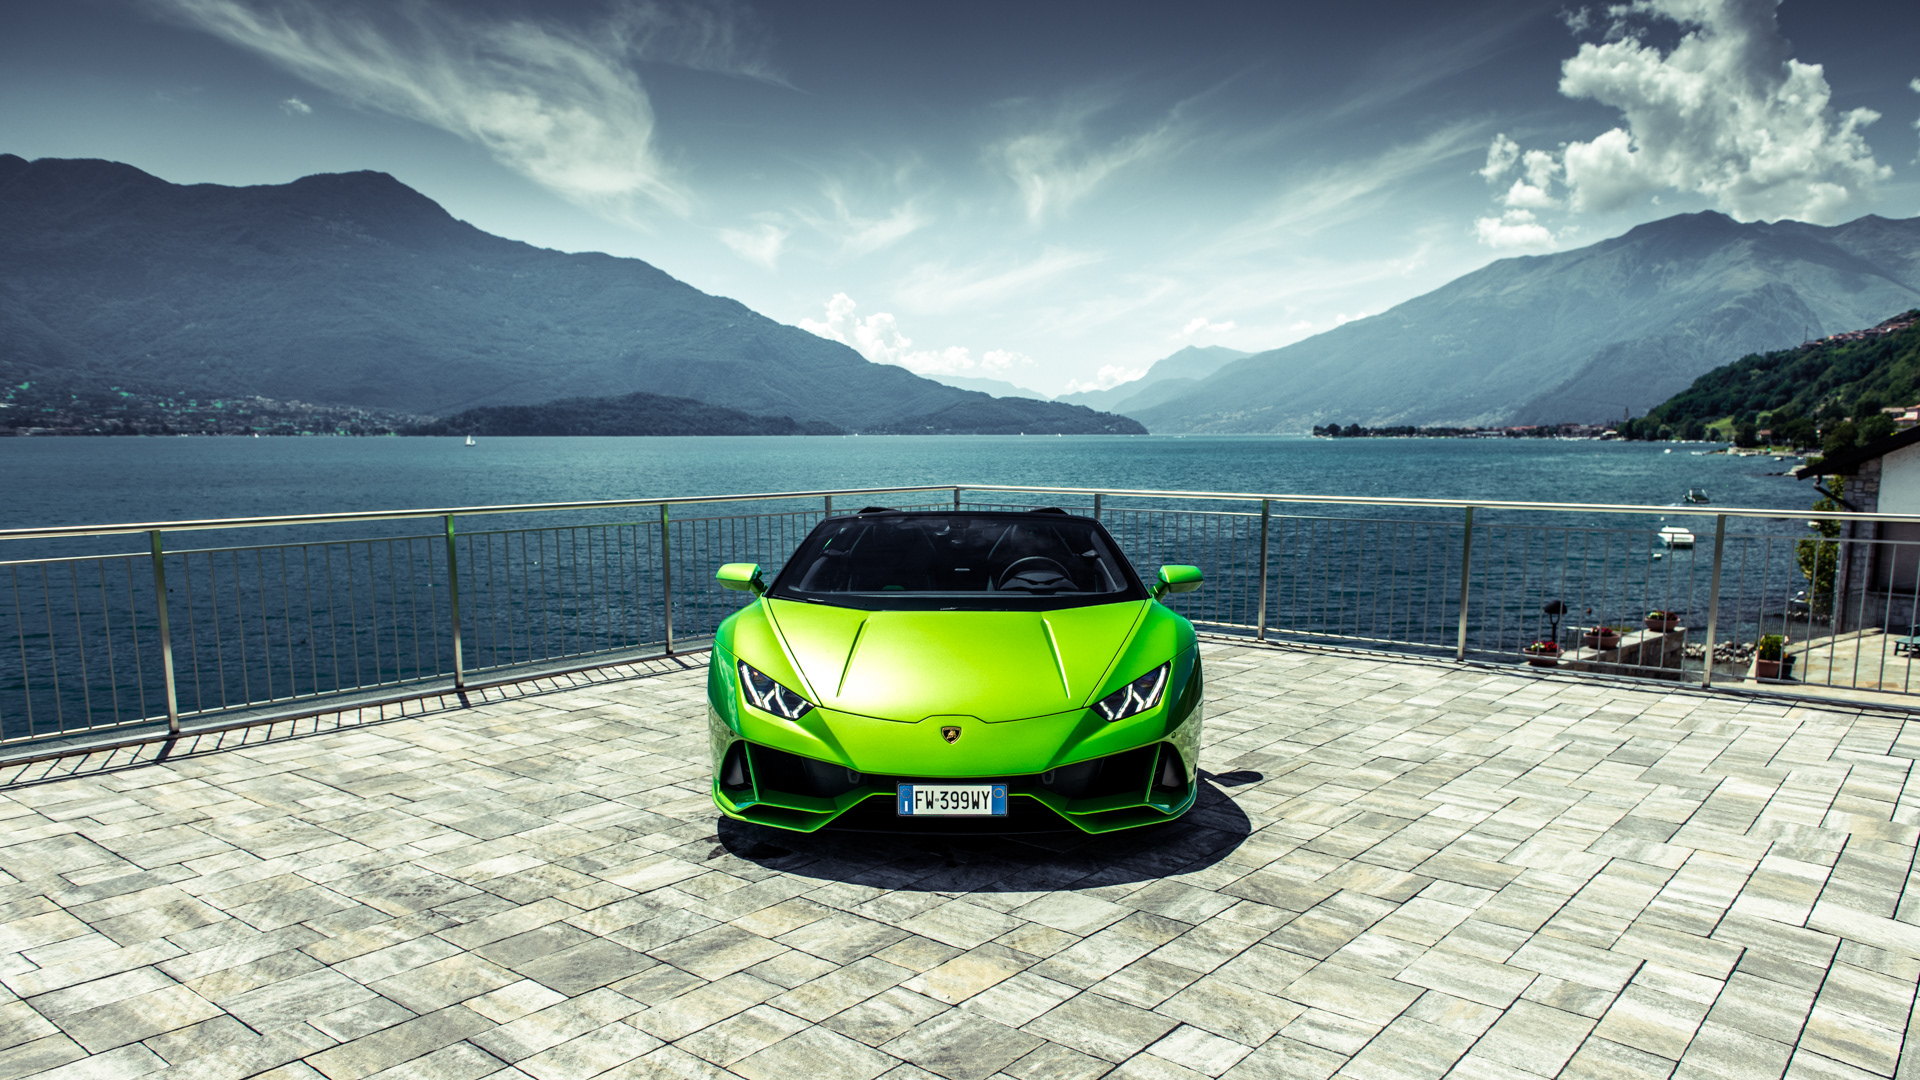 Baixe gratuitamente a imagem Lamborghini, Carro, Super Carro, Lamborghini Huracan, Veículos, Carro Verde, Lamborghini Huracán Evo na área de trabalho do seu PC